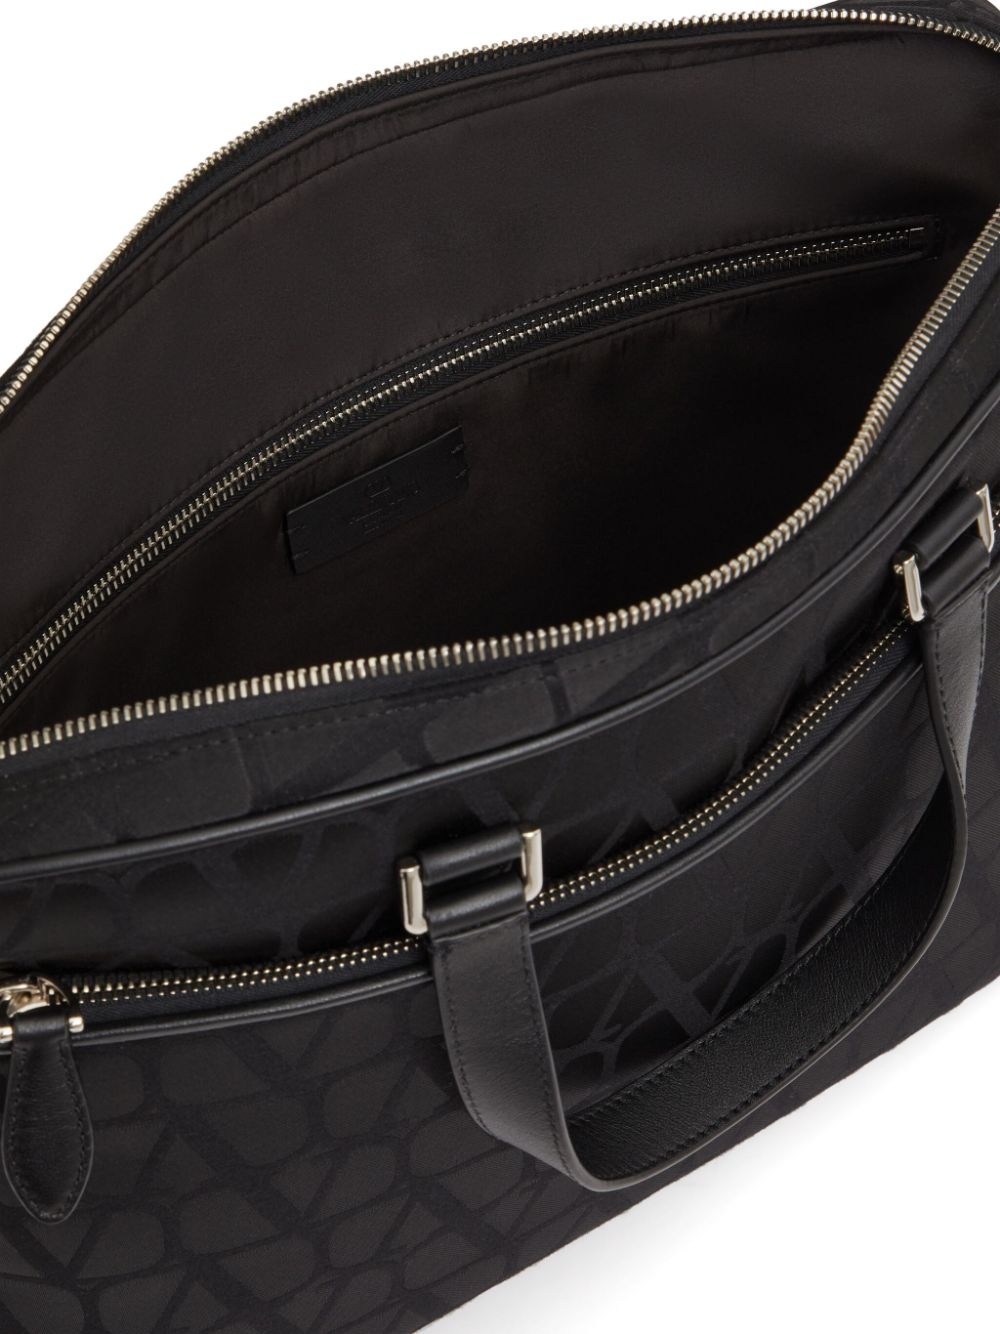 VLogo leather-trim laptop bag - 6